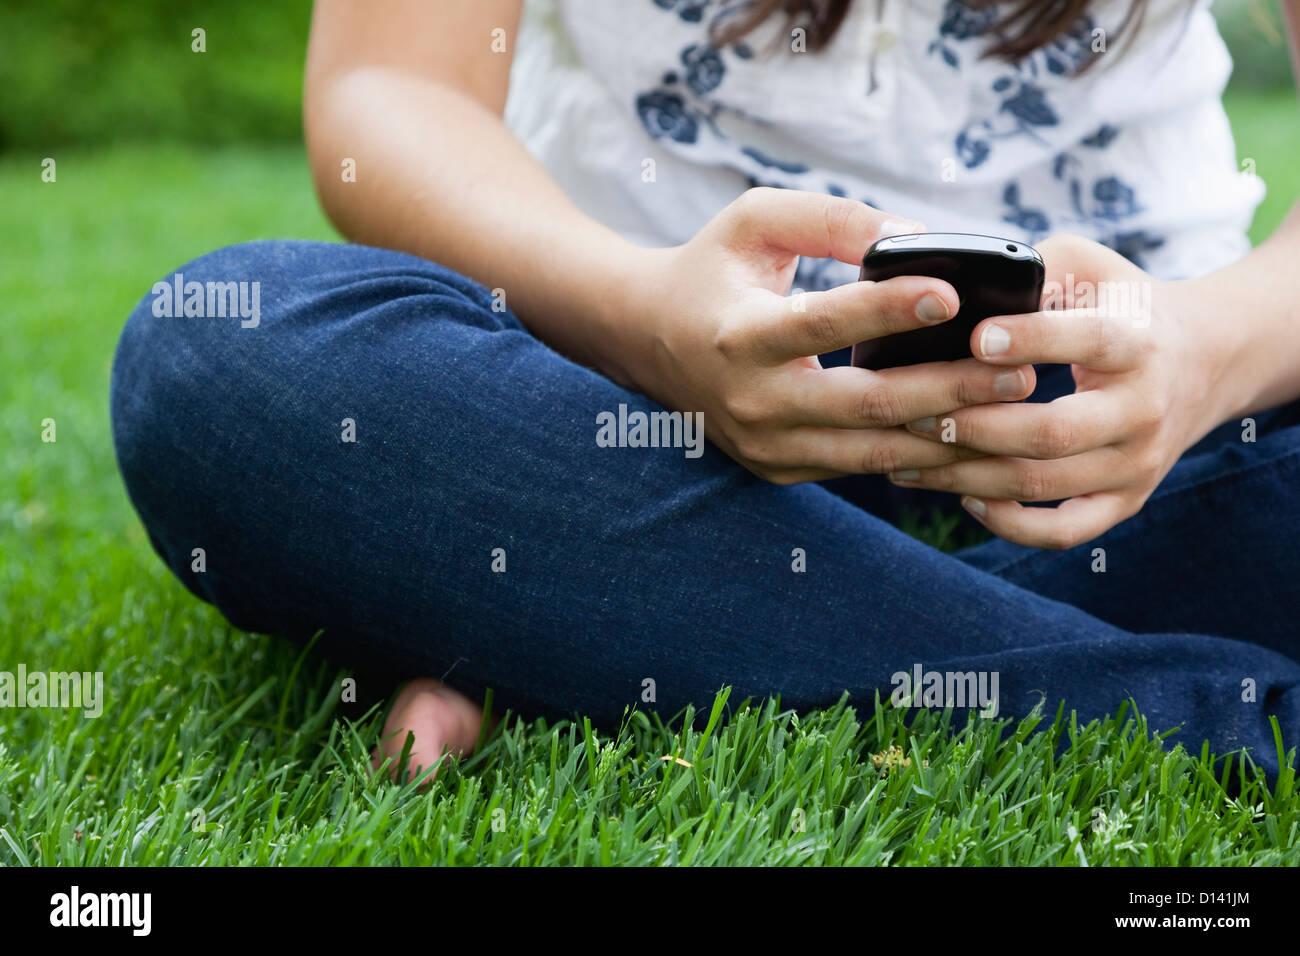 USA, Illinois, Metamora, Young woman texting on his mobile while sitting on grass Stock Photo